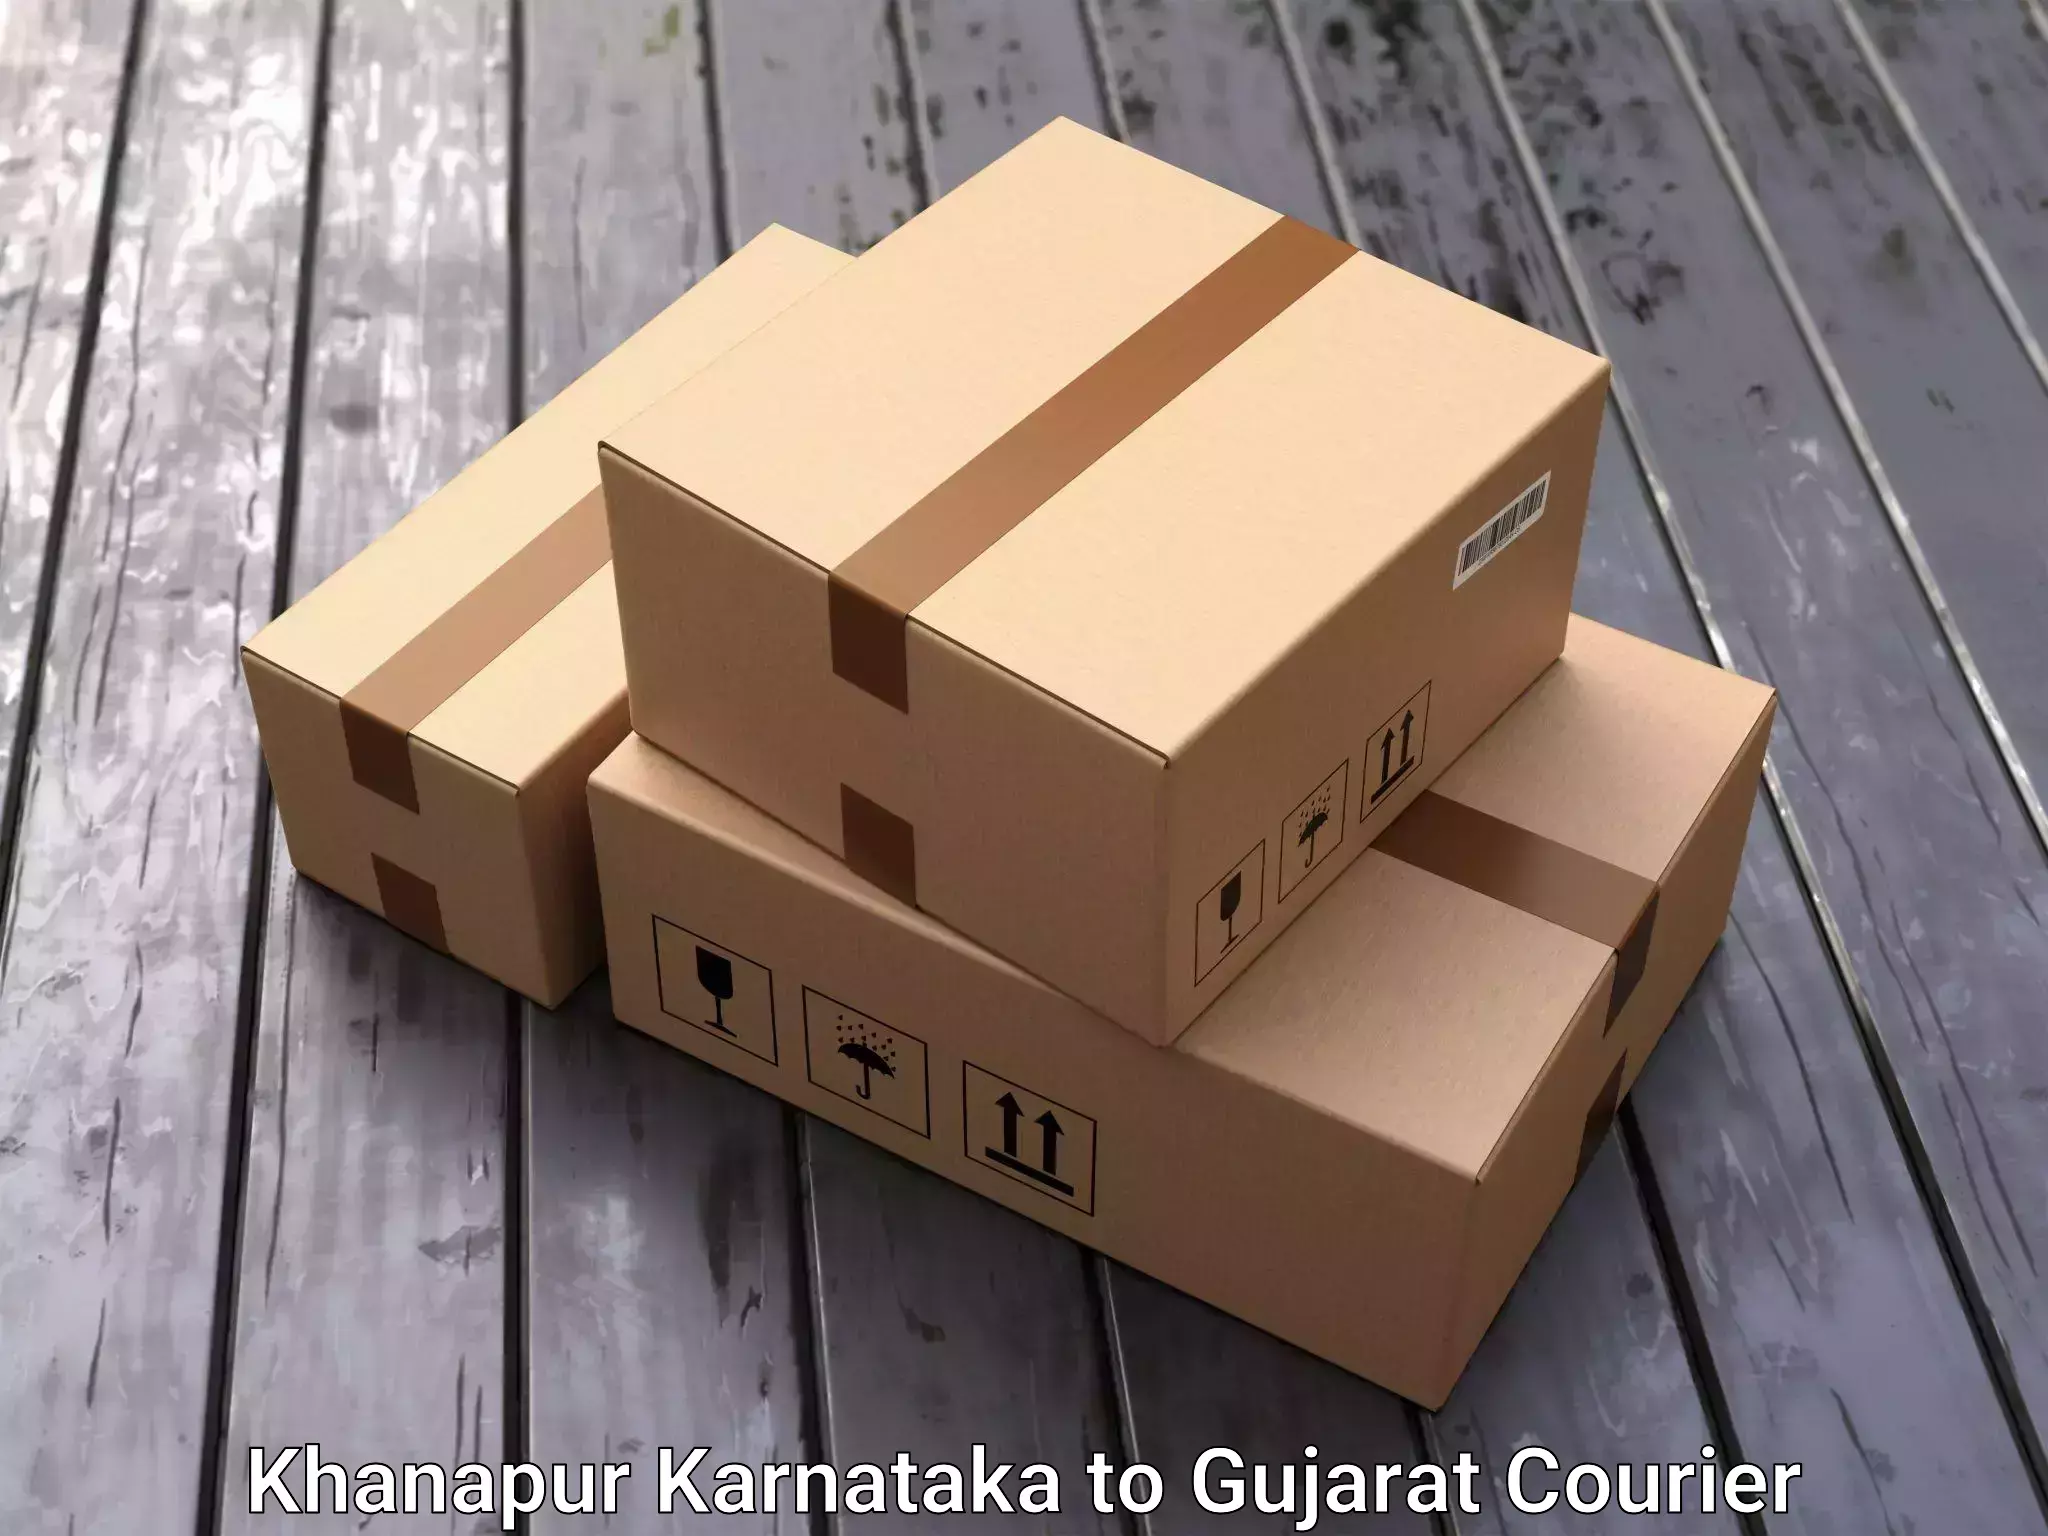 Professional moving assistance Khanapur Karnataka to Gujarat